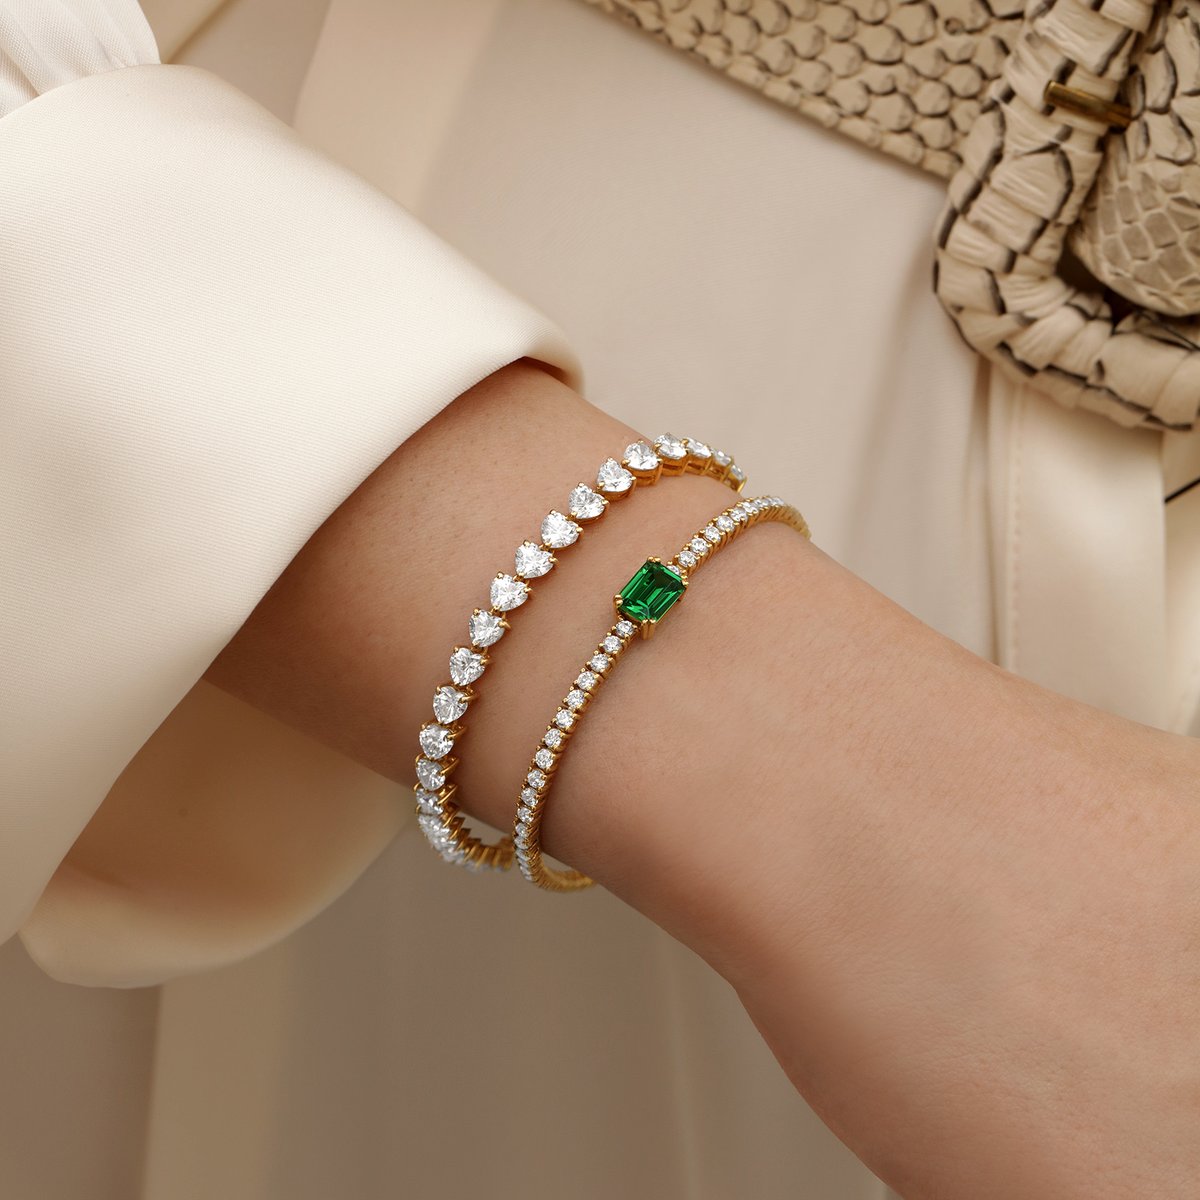 Diamonds or emeralds? Why not both? Double the dazzle, double the delight. 💎💚 
#AquaeJewels

#GemstoneGlam #DazzlingDuos #JewelryMagic #WristCandy